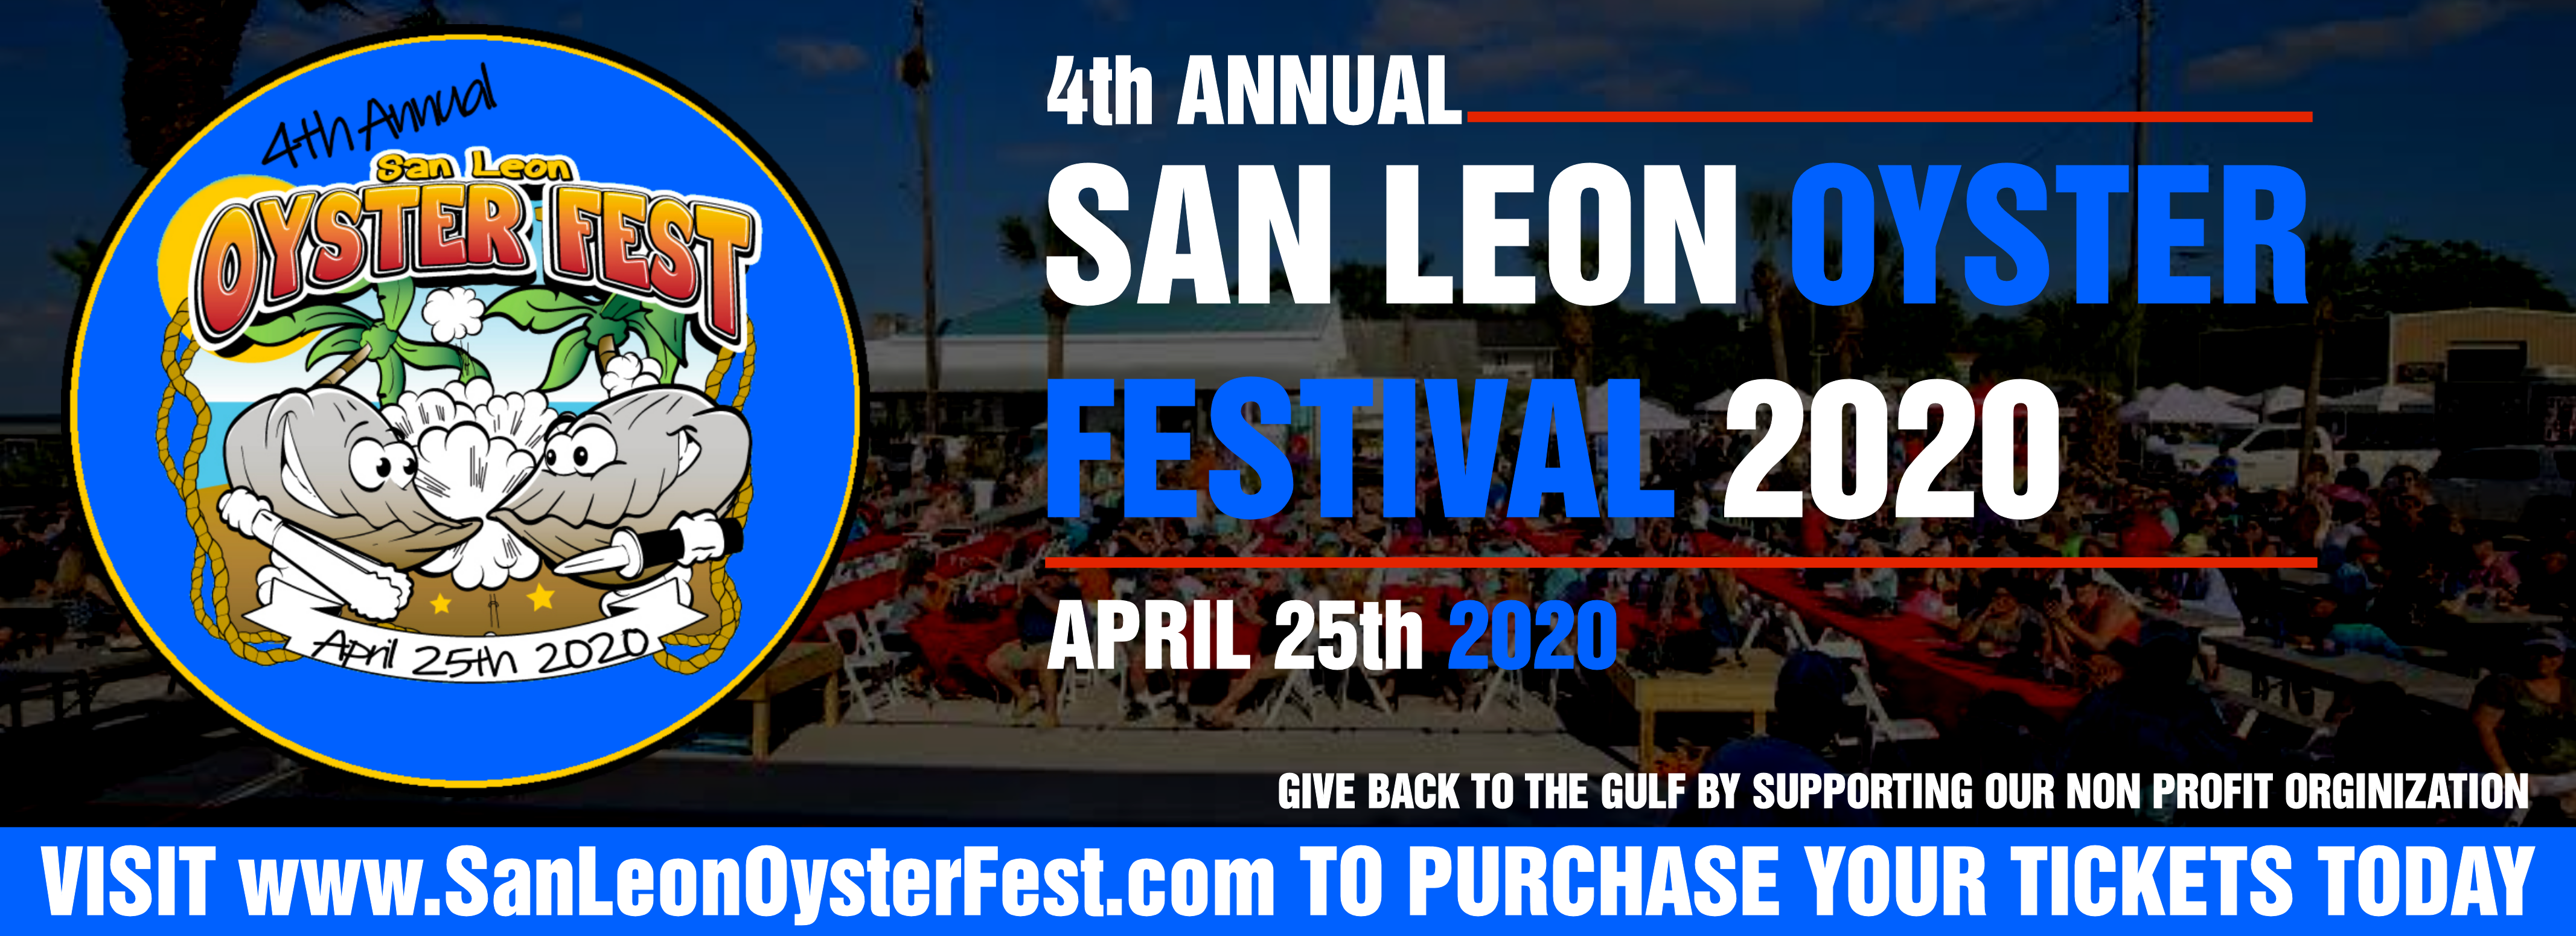 4th Annual San Leon Oyster Fest